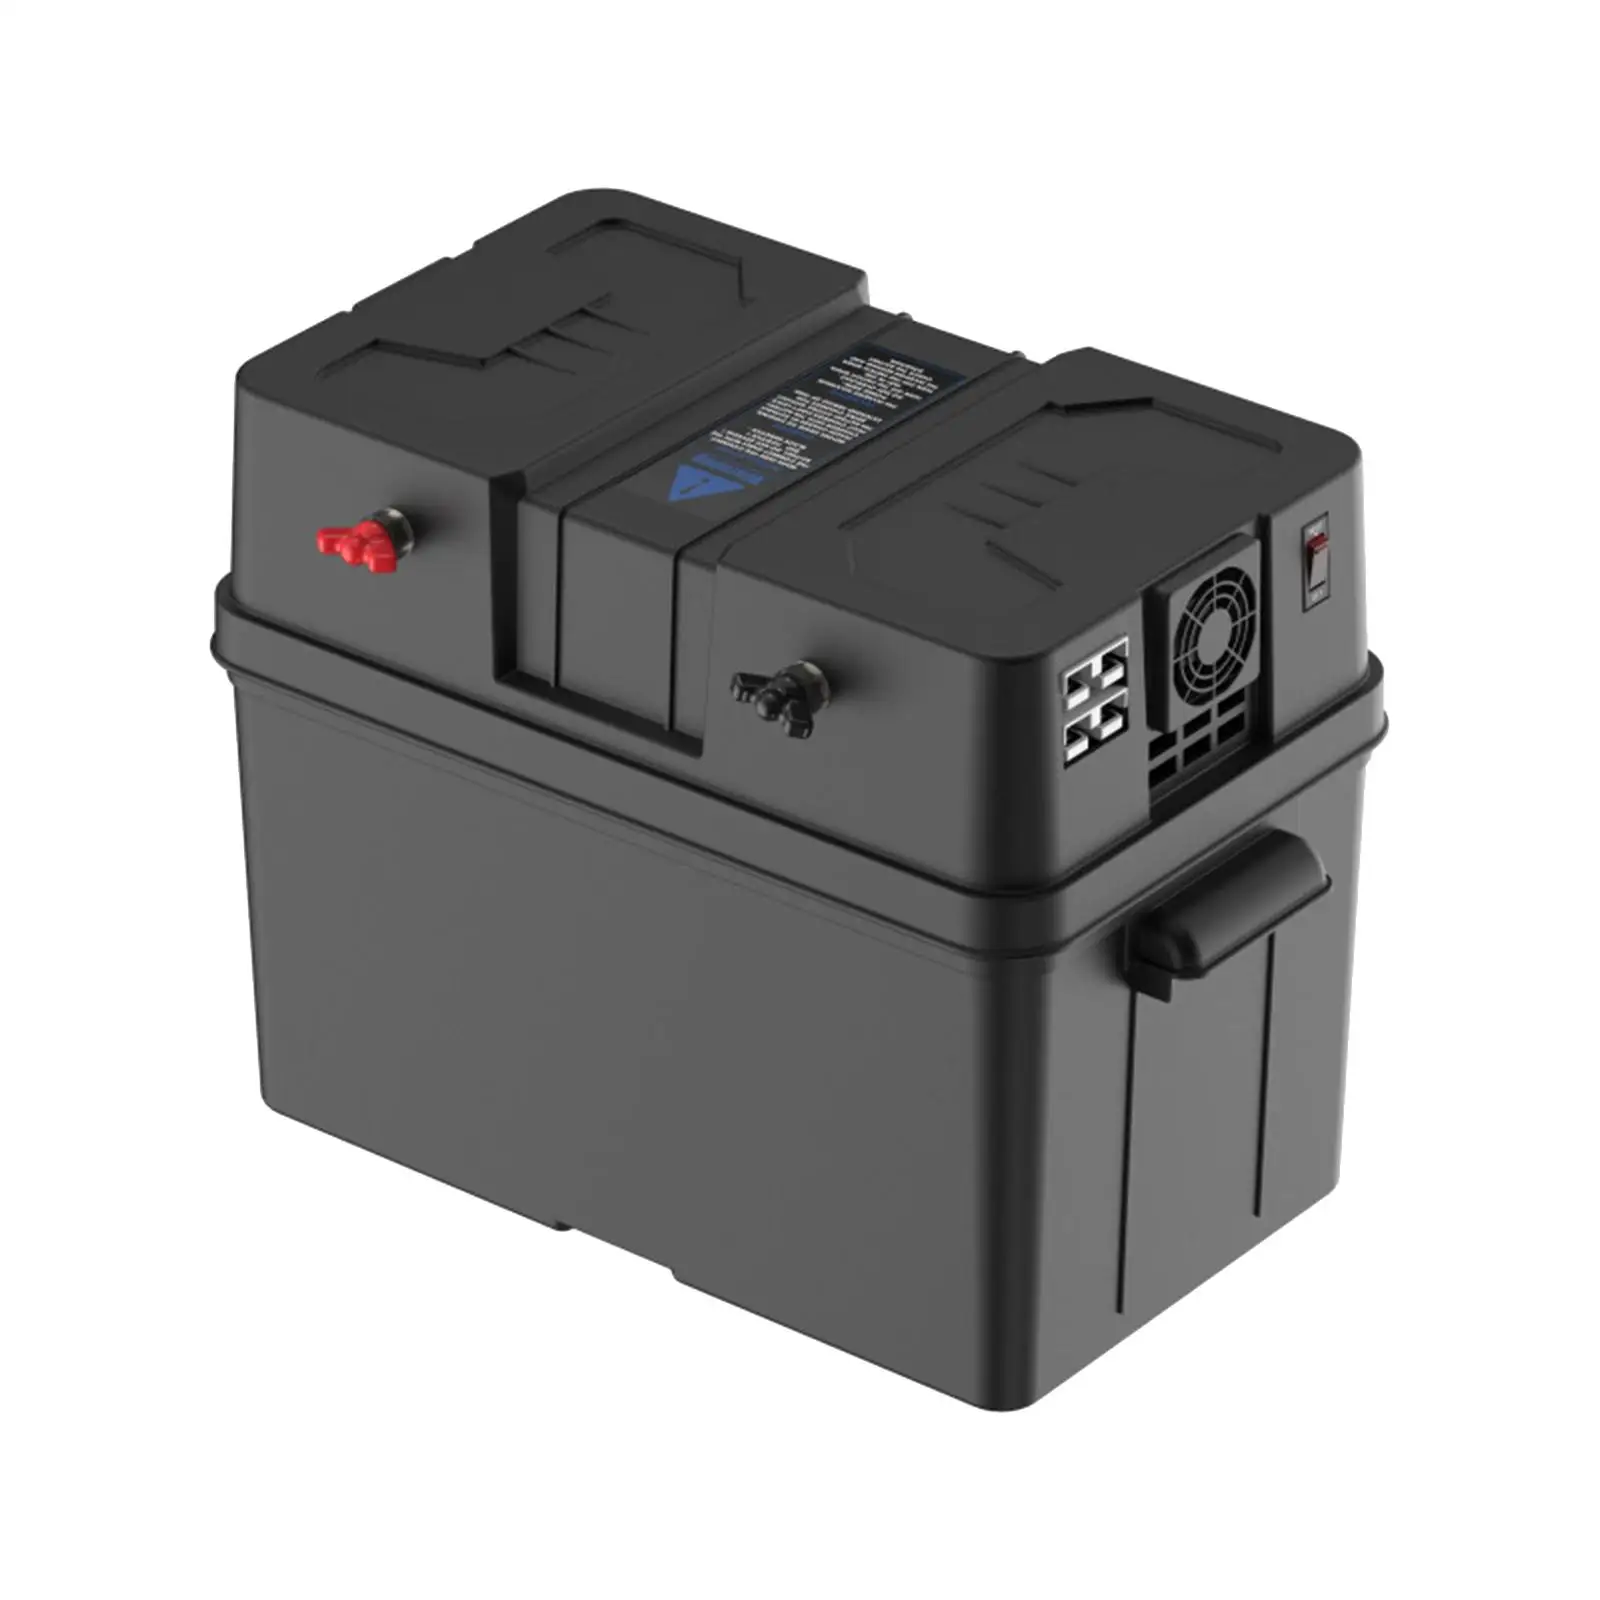 Trolling Motor Battery Box Dual USB Ports Heavy Duty Multifunction 12 V RV Battery Box for SUV Car Solar Camping Travel